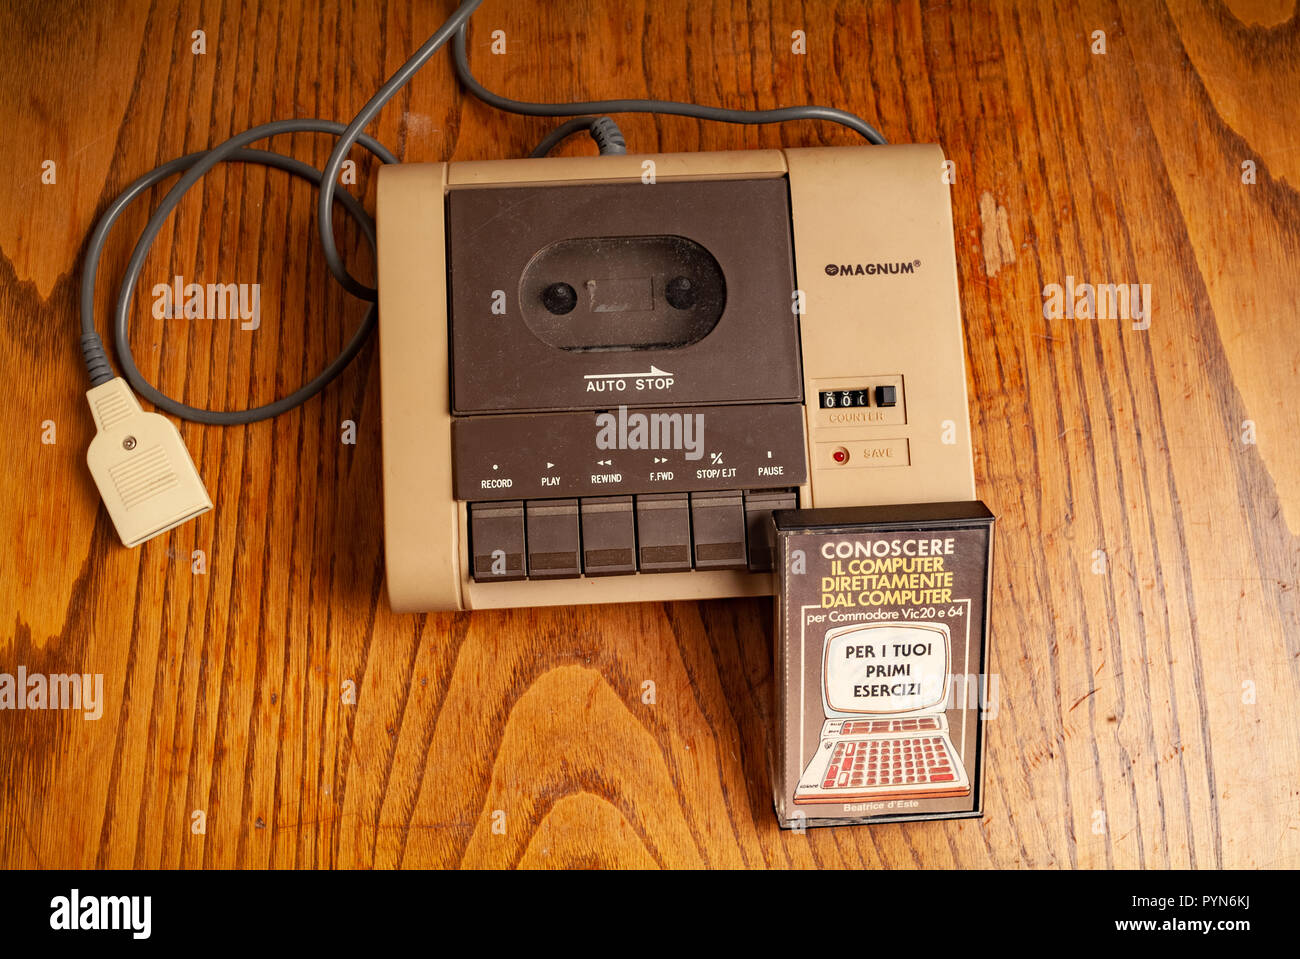 Commodore 64 1980s tape cassette reader Stock Photo - Alamy